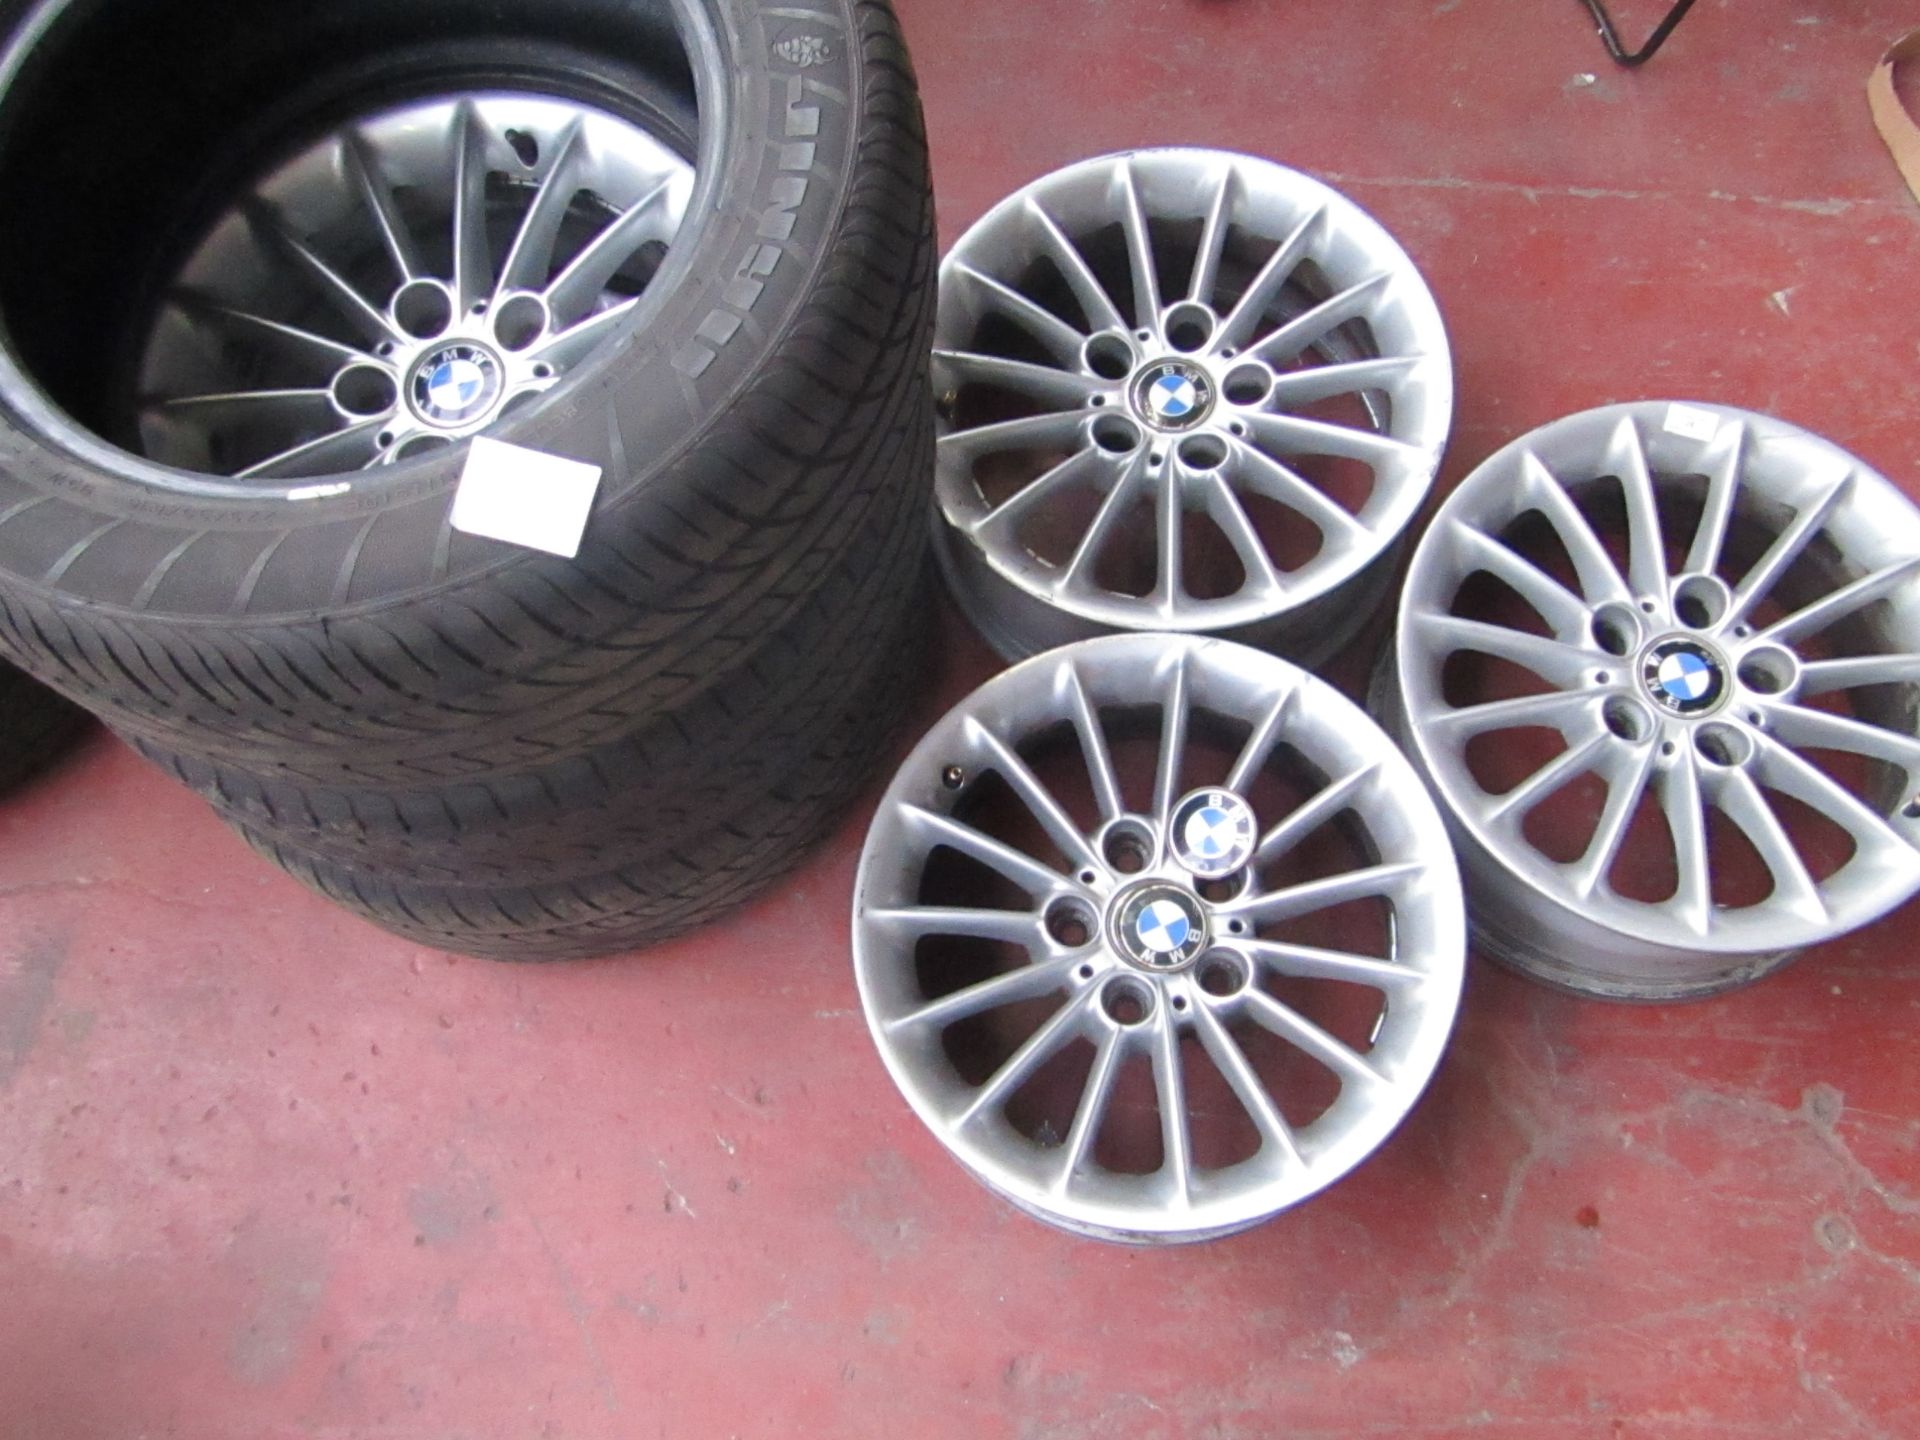 5x BMW 3 Series alloys with 3 good tyres.